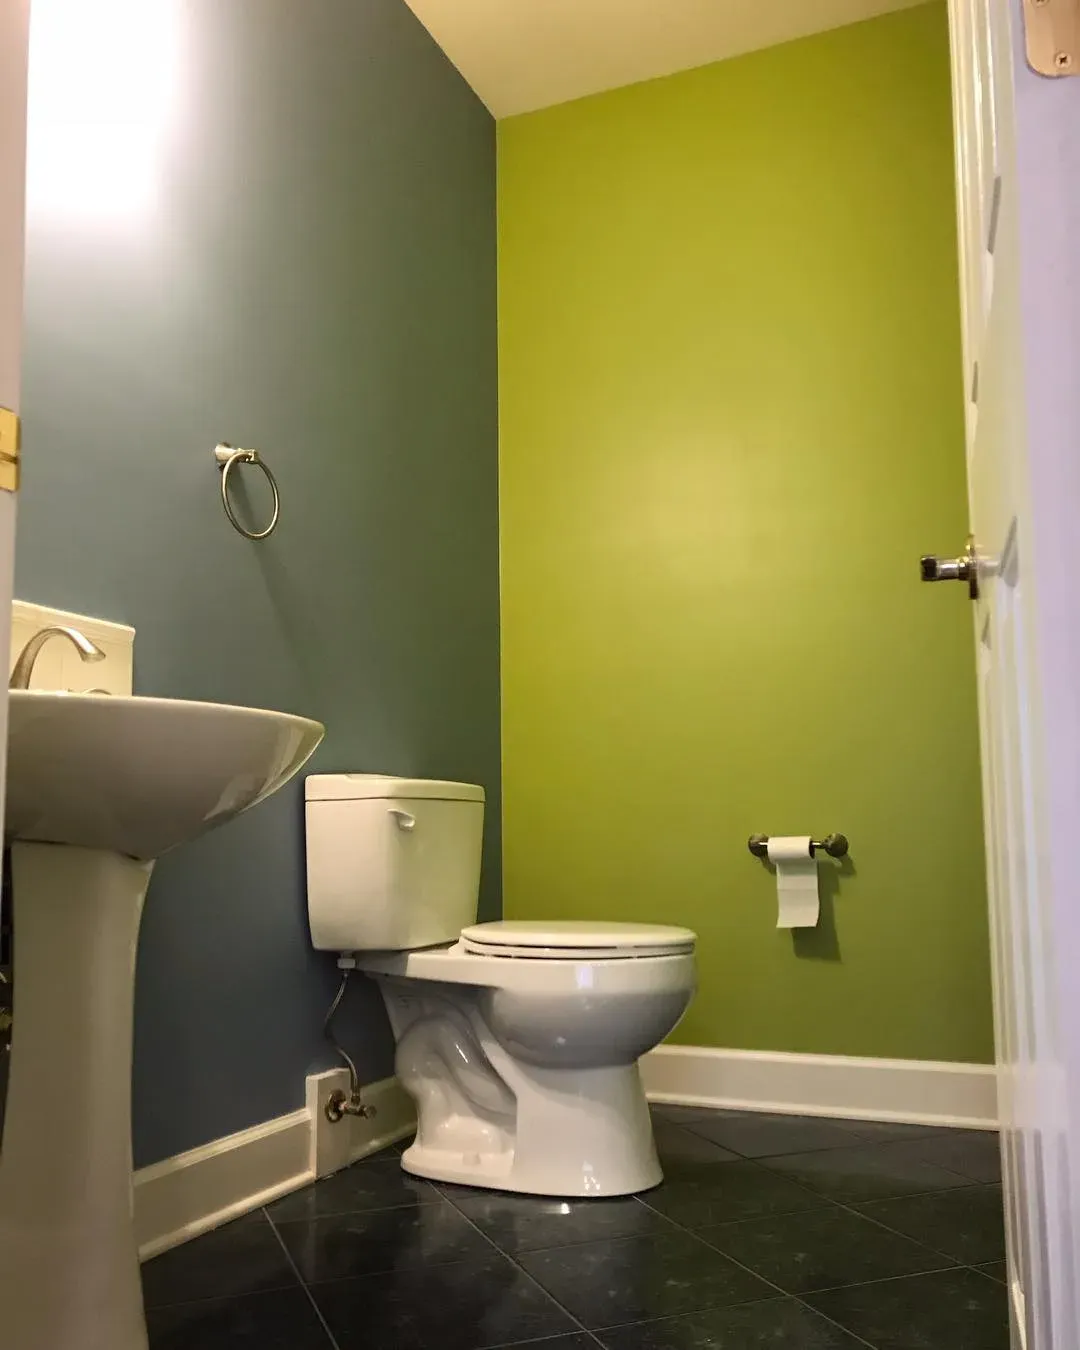 Sherwin Williams Parakeet bathroom color paint